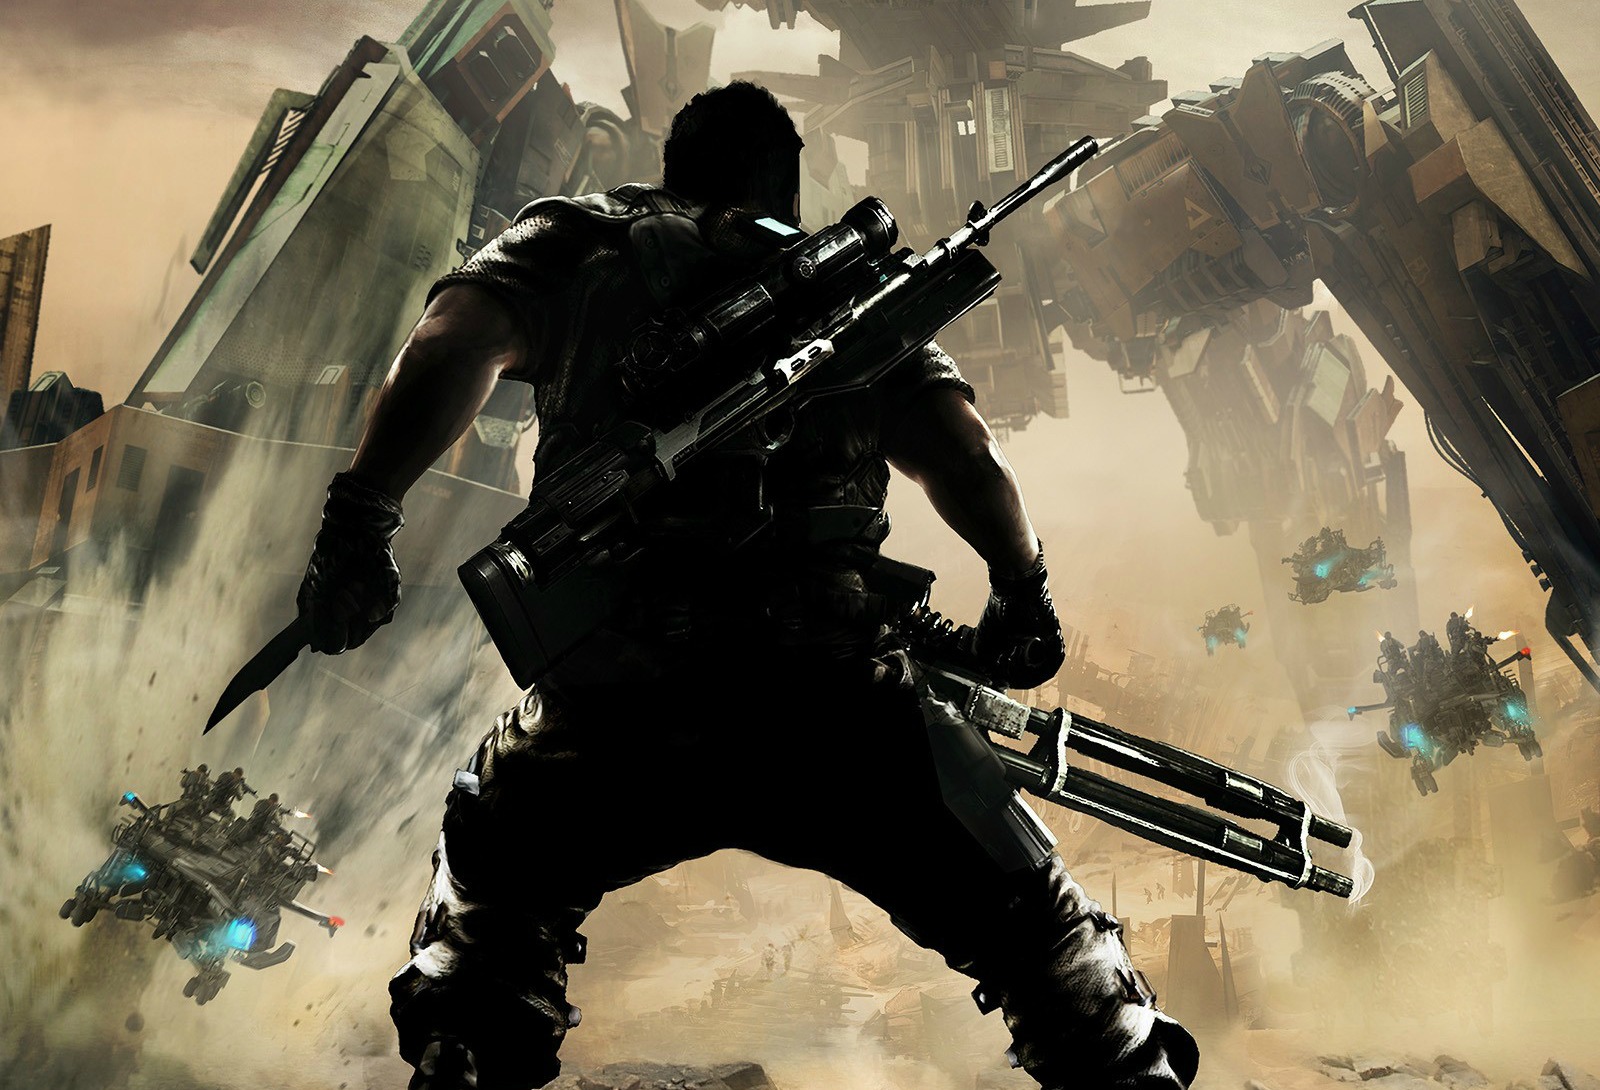 Video Game Killzone 3 HD Wallpaper | Background Image